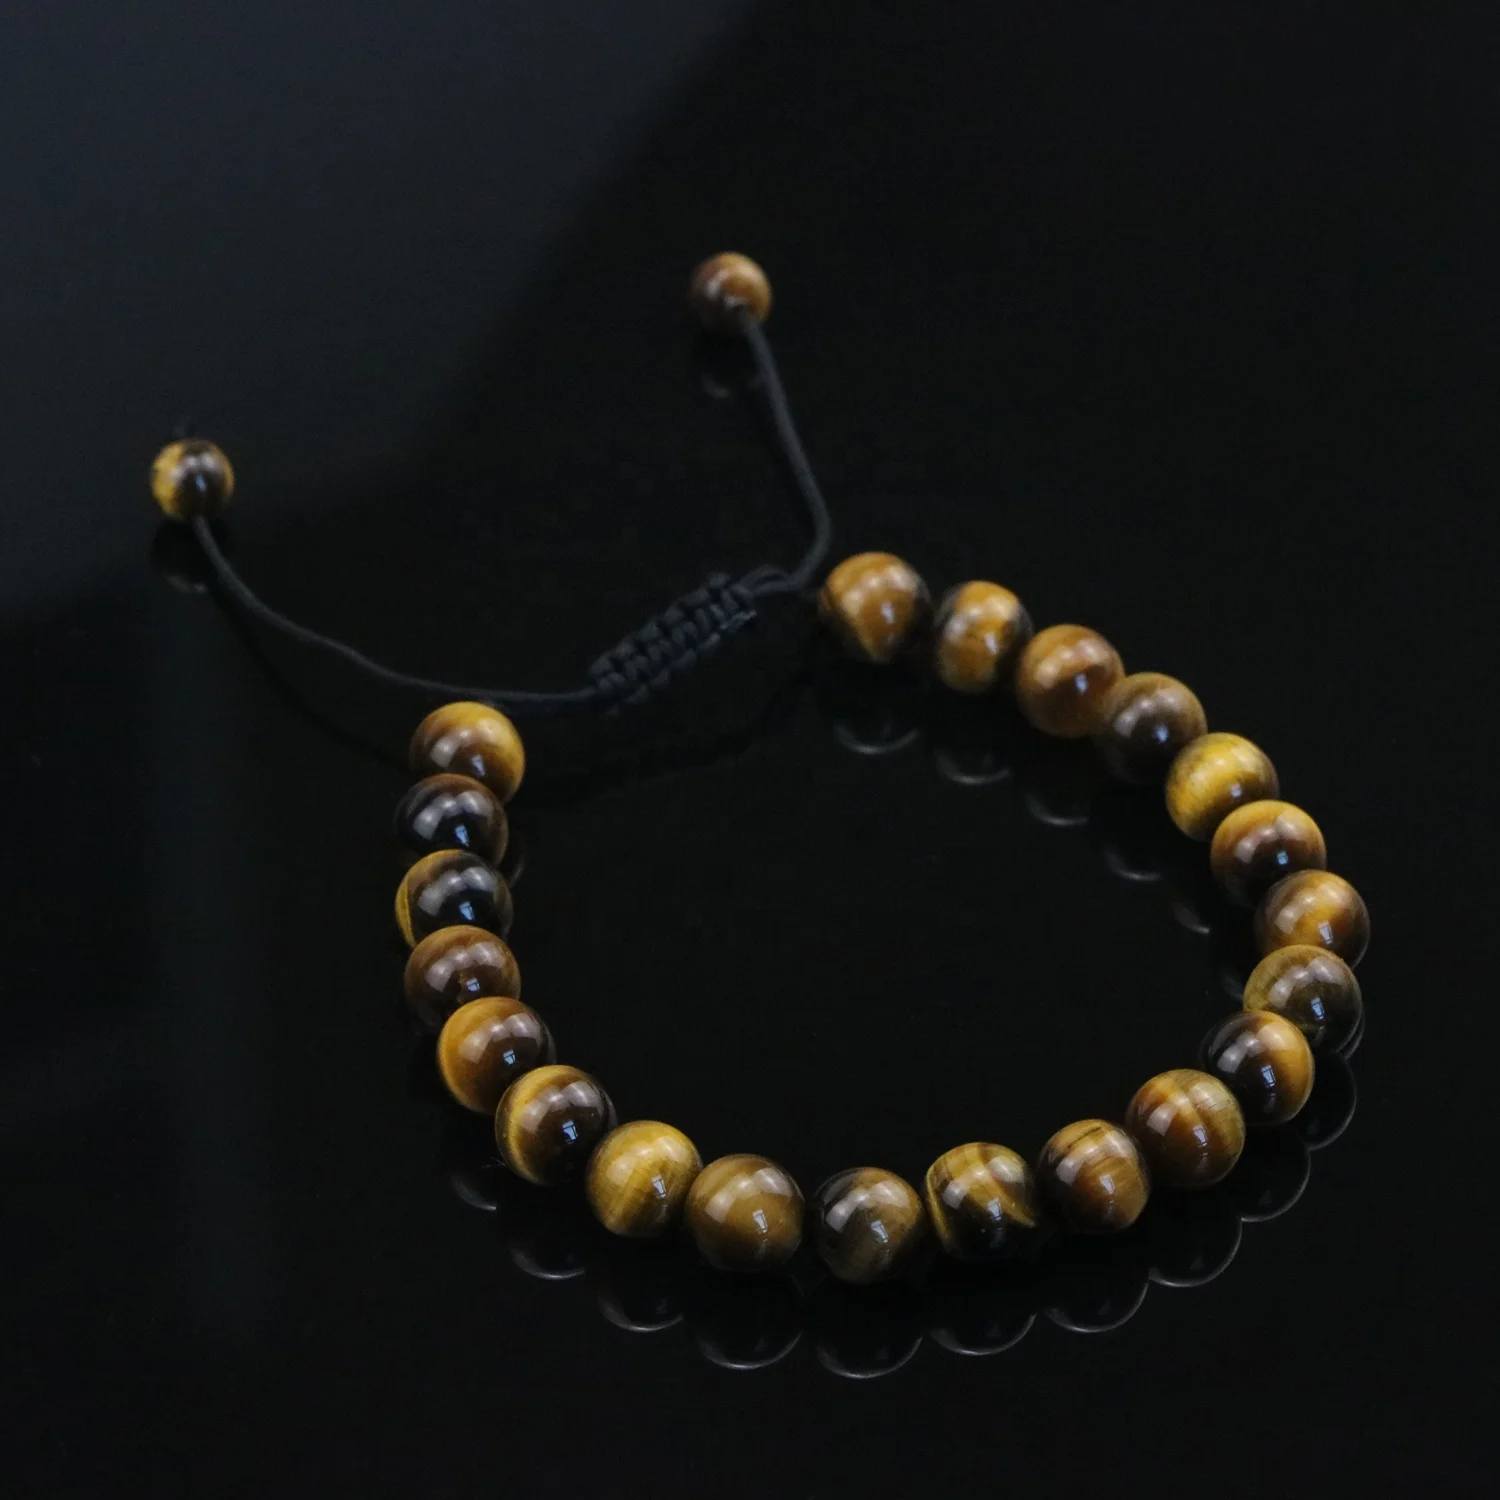  Joycuff Healing Jewelry Set Handmade Natural Stone Lava Bead Tiger Eye Bracelet